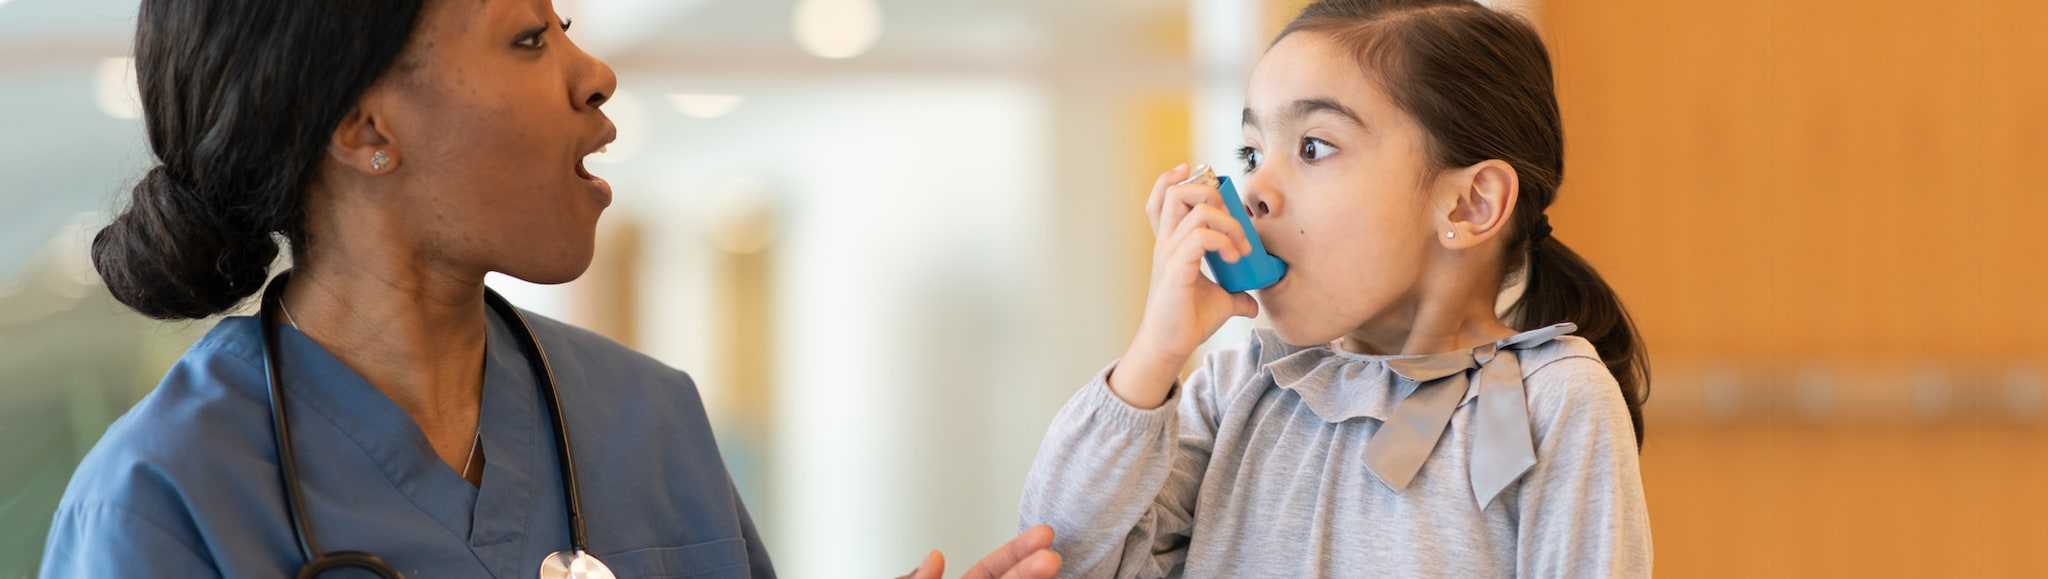 Doctor supervises young girl using asthma inhaler